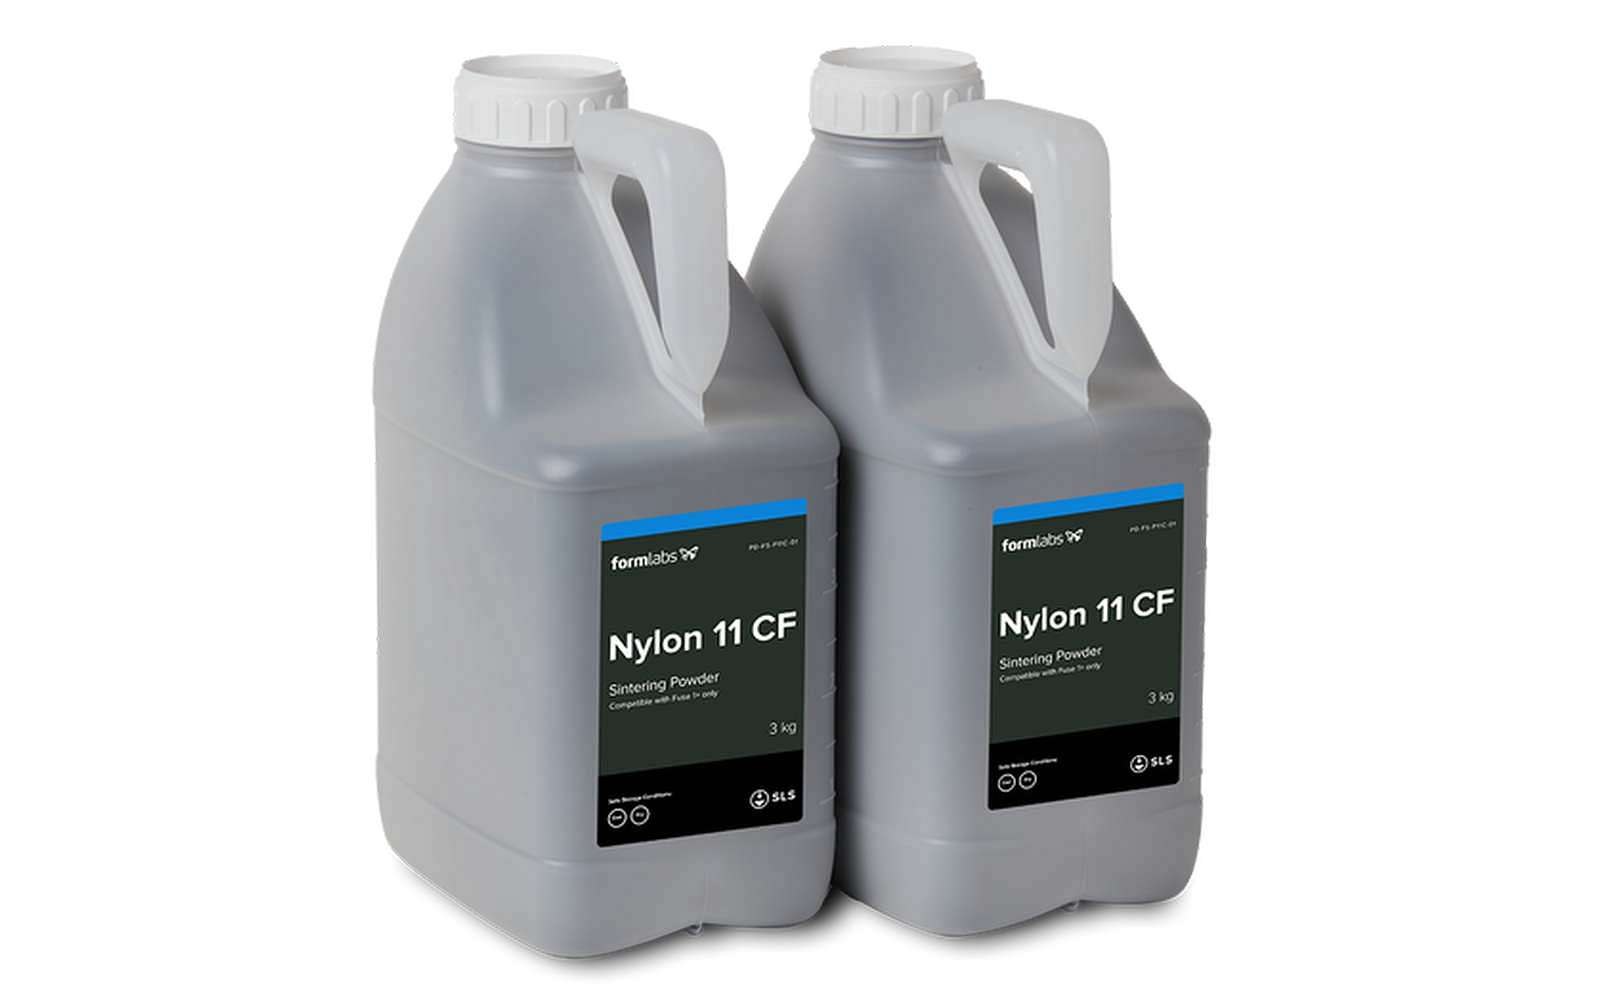 Formlabs Nylon 11 CF  Powder